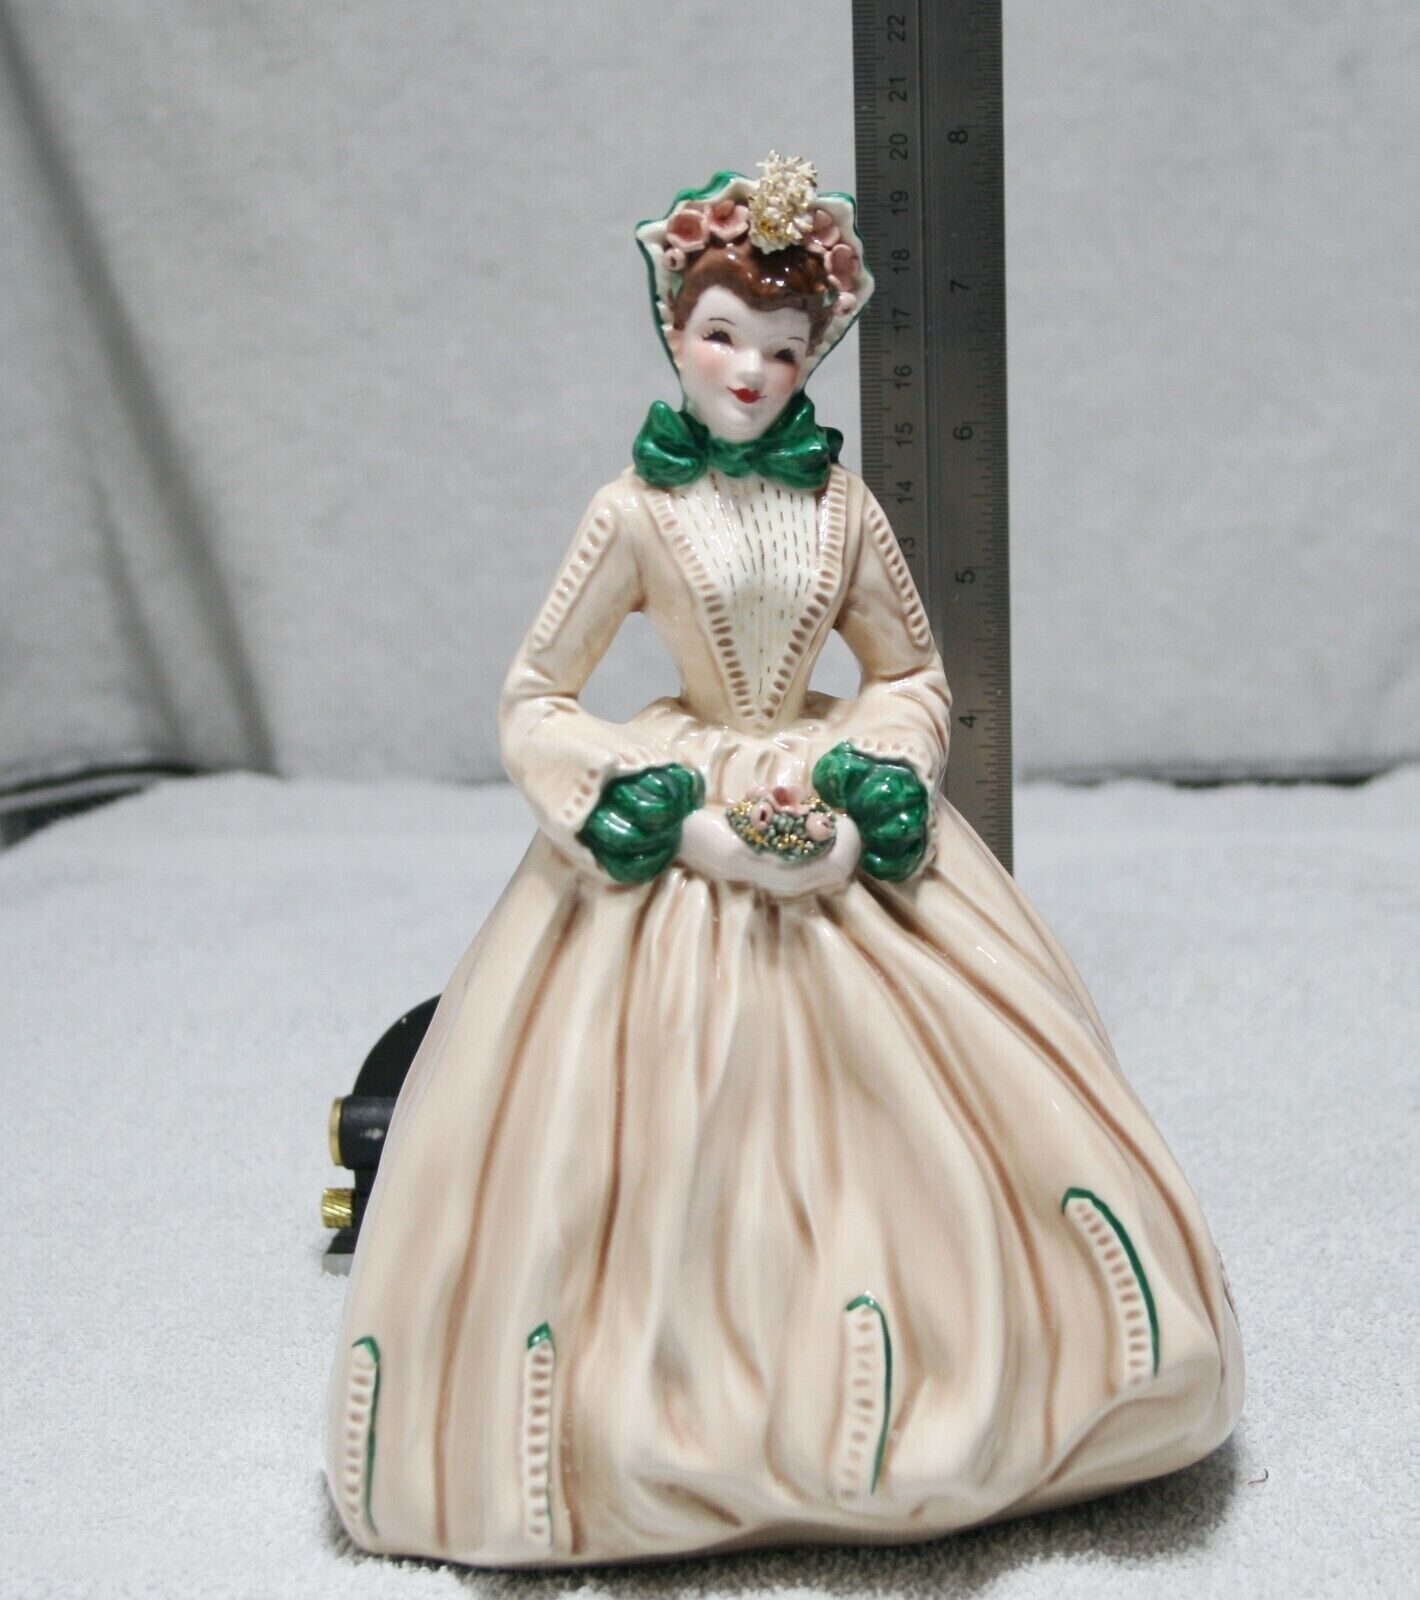 RARE Vintage SUE ELLEN Florence Ceramic Figurine - Signed LK Pasadena CA